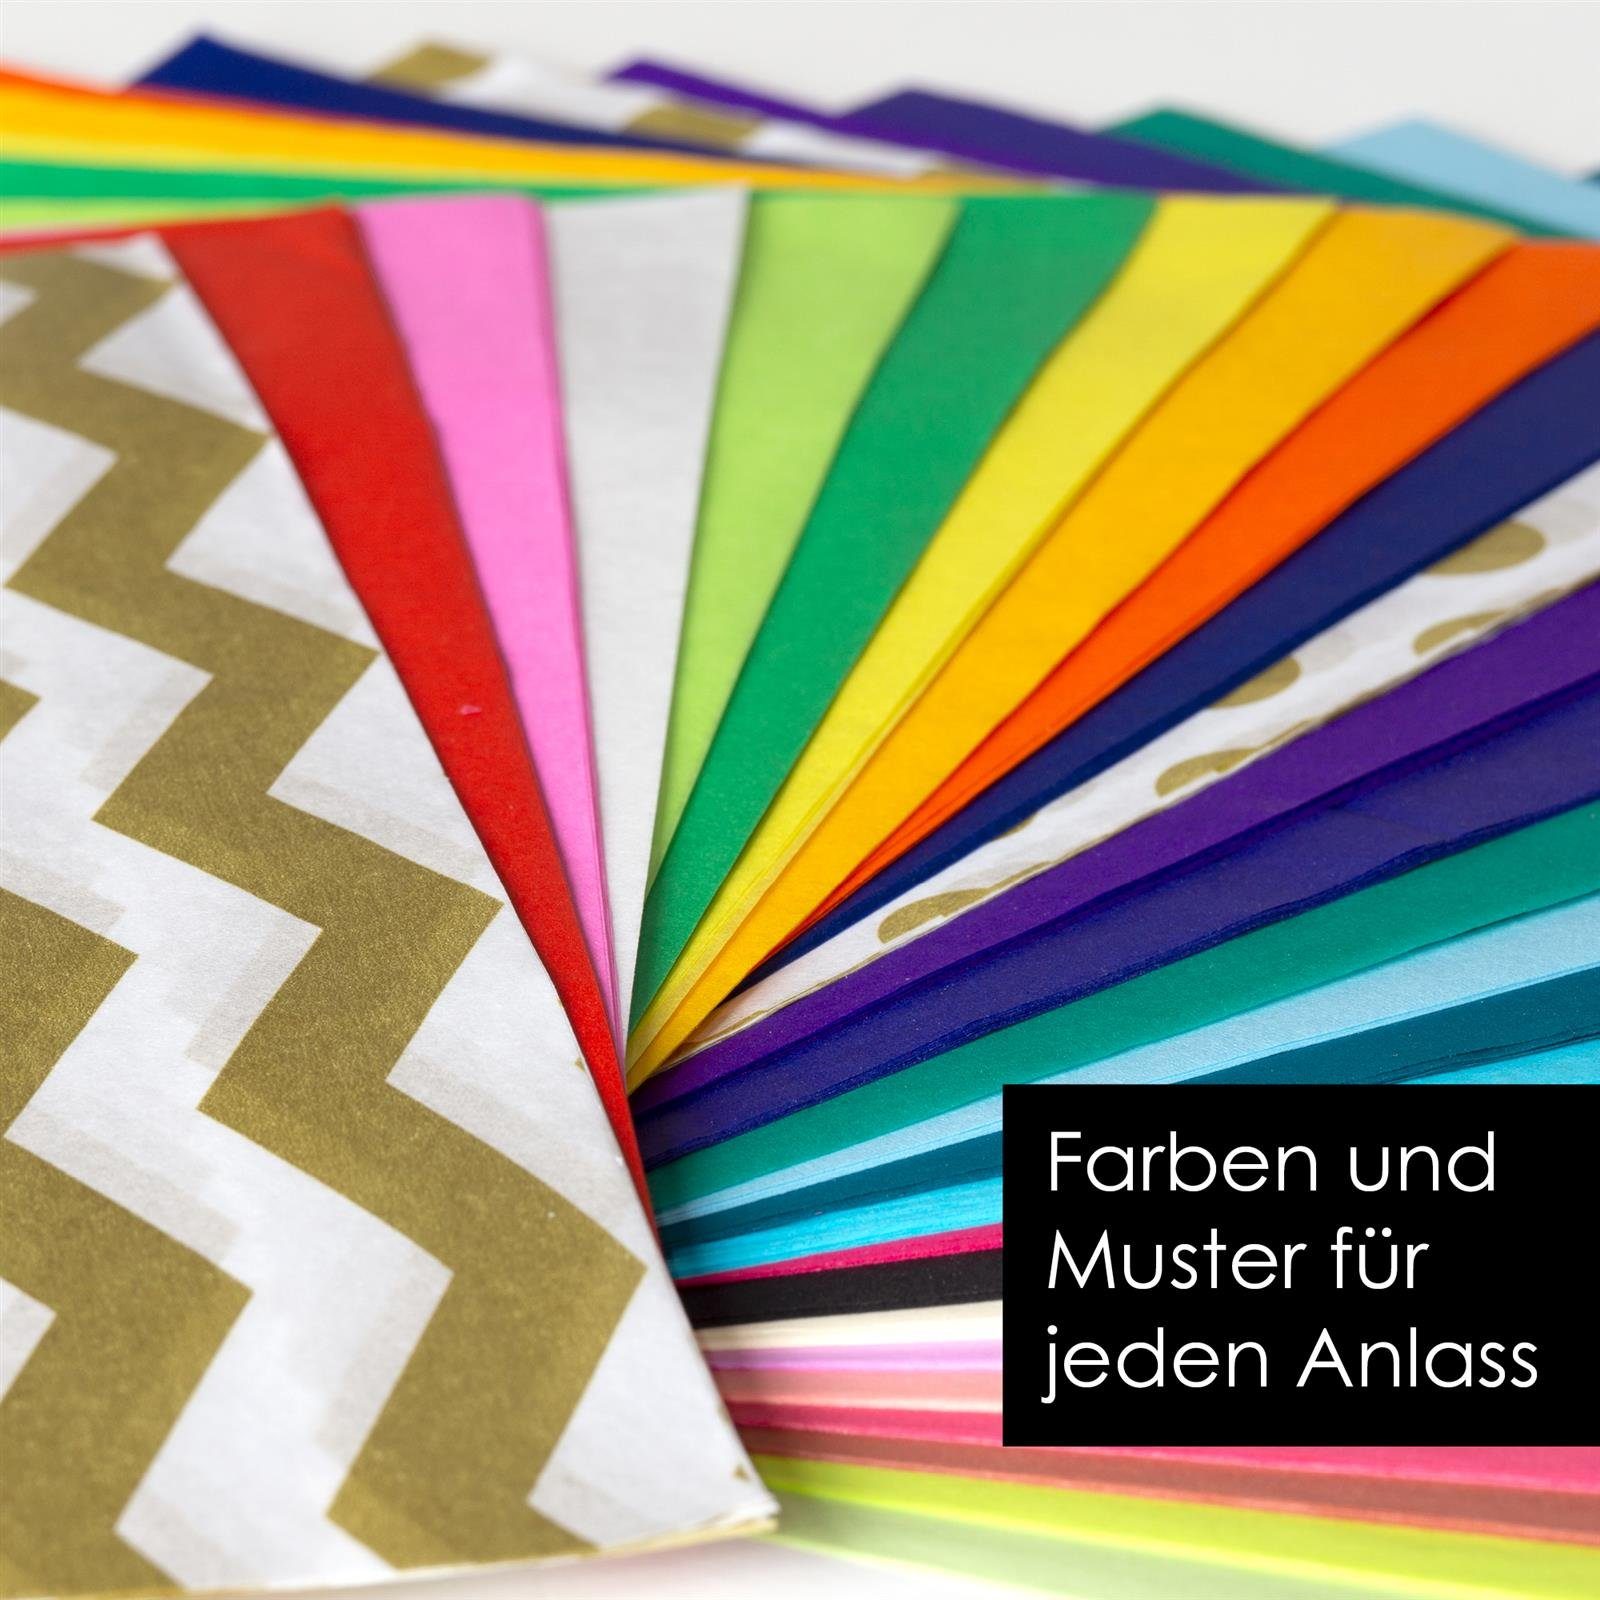 26 Spaß - mehr OfficeTree Basteln Farben Gestalten Blatt, Seidenpapier Seidenpapier 360 am A4 bunt - Dekorieren